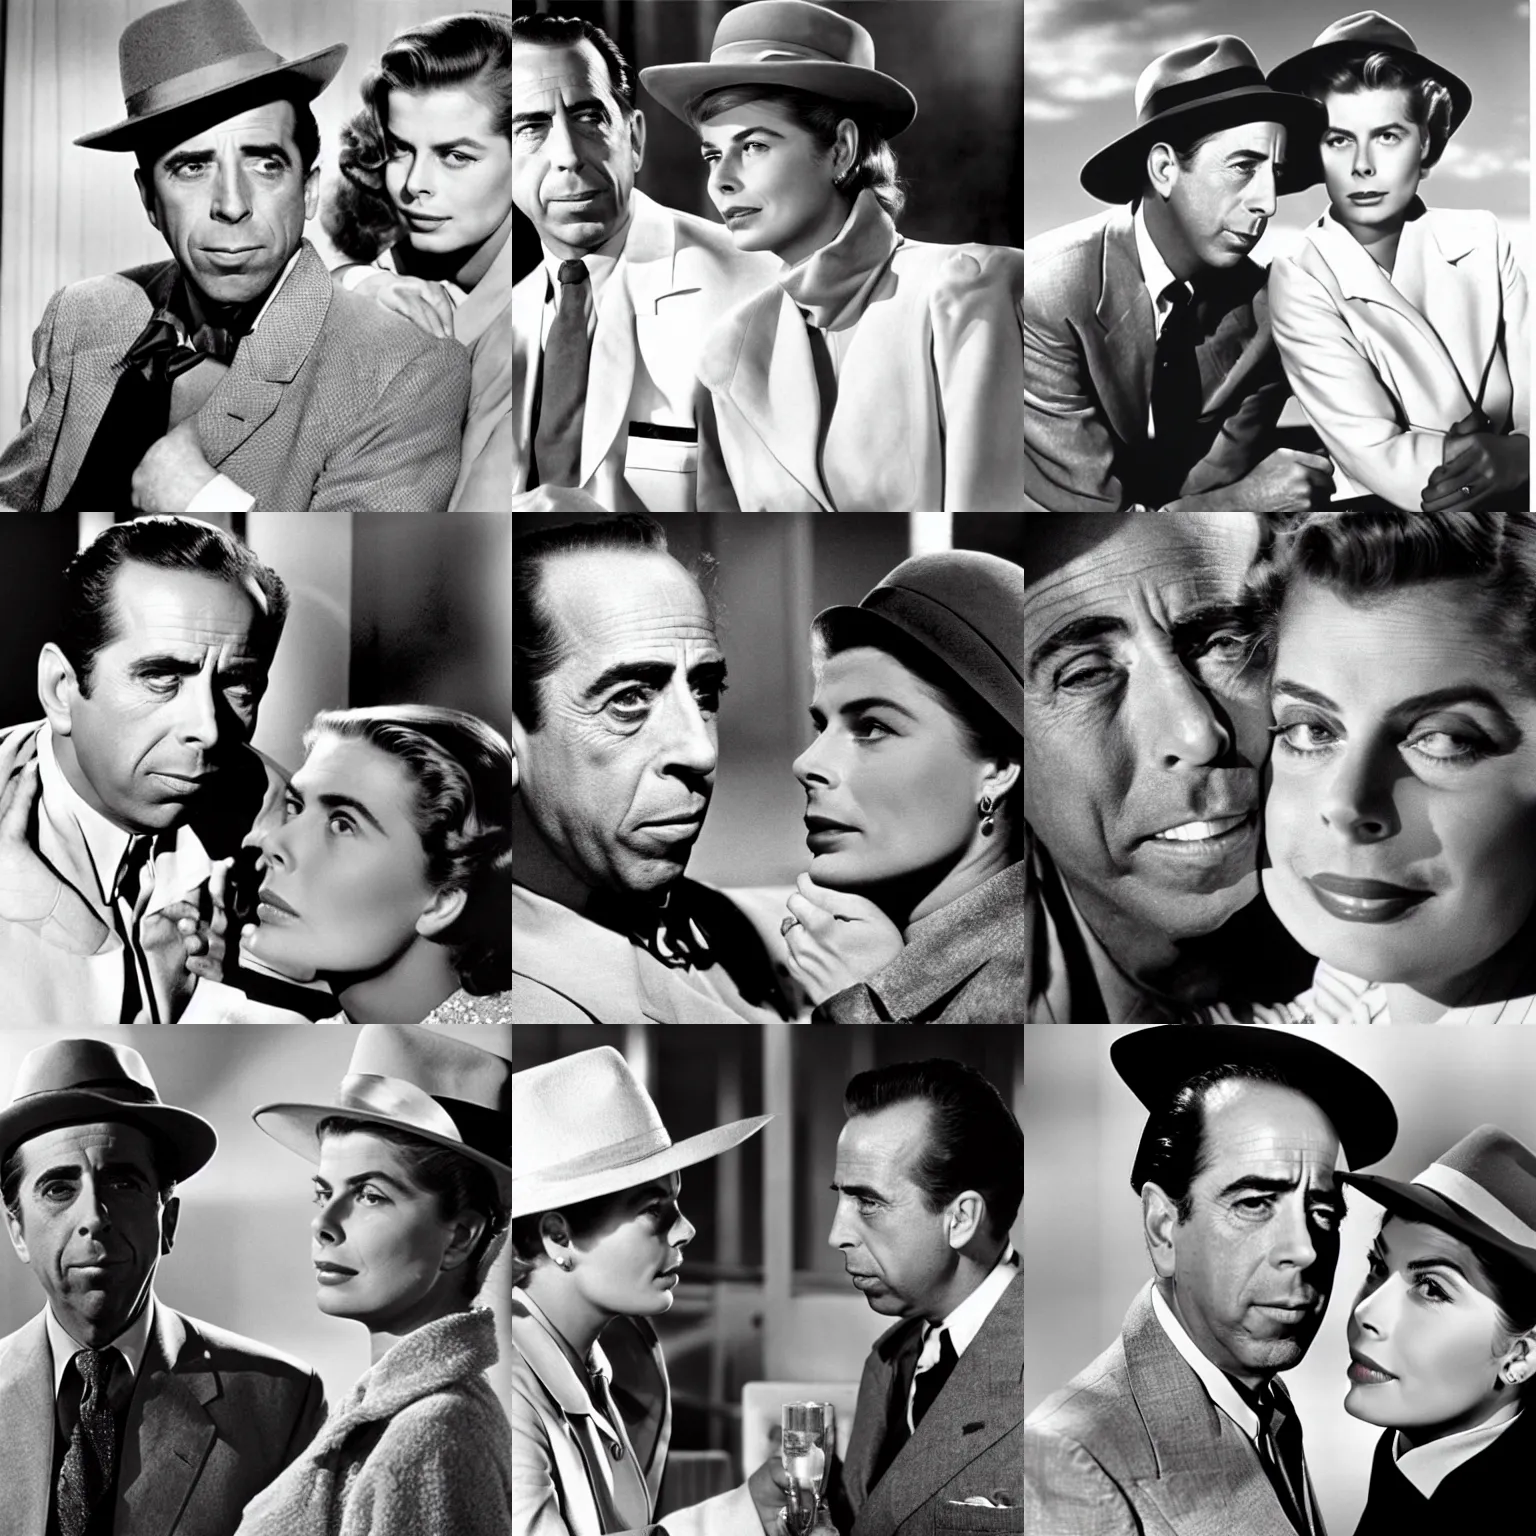 Prompt: \'Here\'s looking at you kid\', Humphrey Bogart and Ingrid Bergman in Casablanca